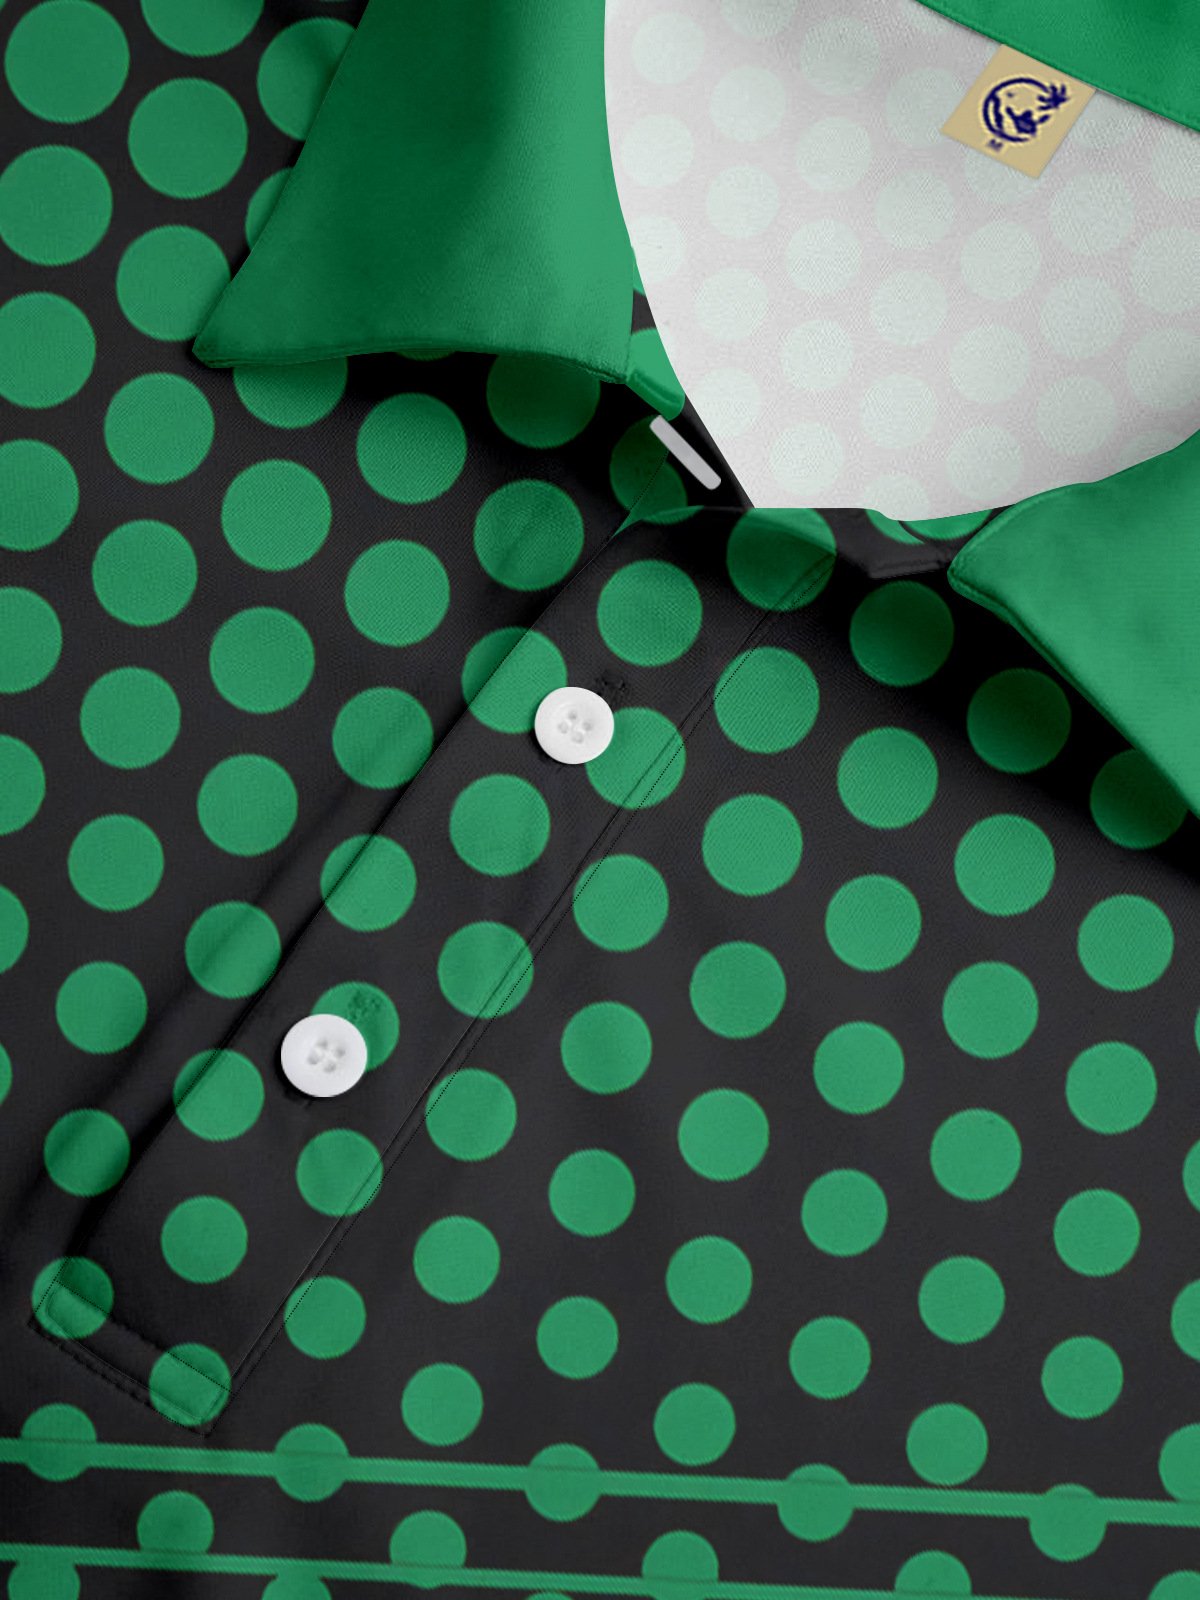 Geometric Polka Dot Button Short Sleeve Golf Polo Shirt